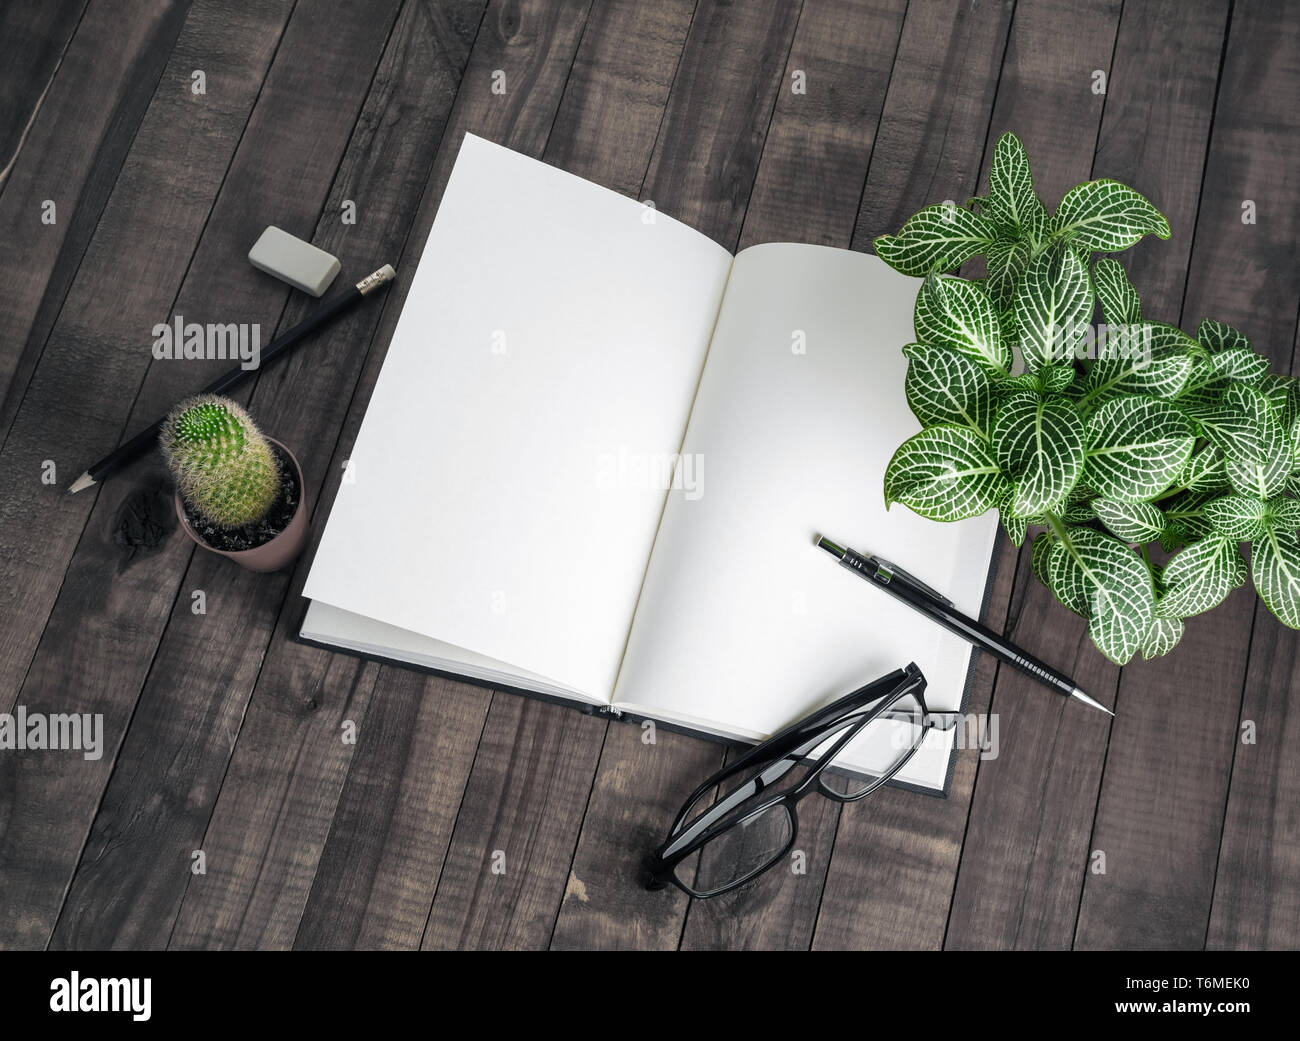 Book, stationery, plants Stock Photo